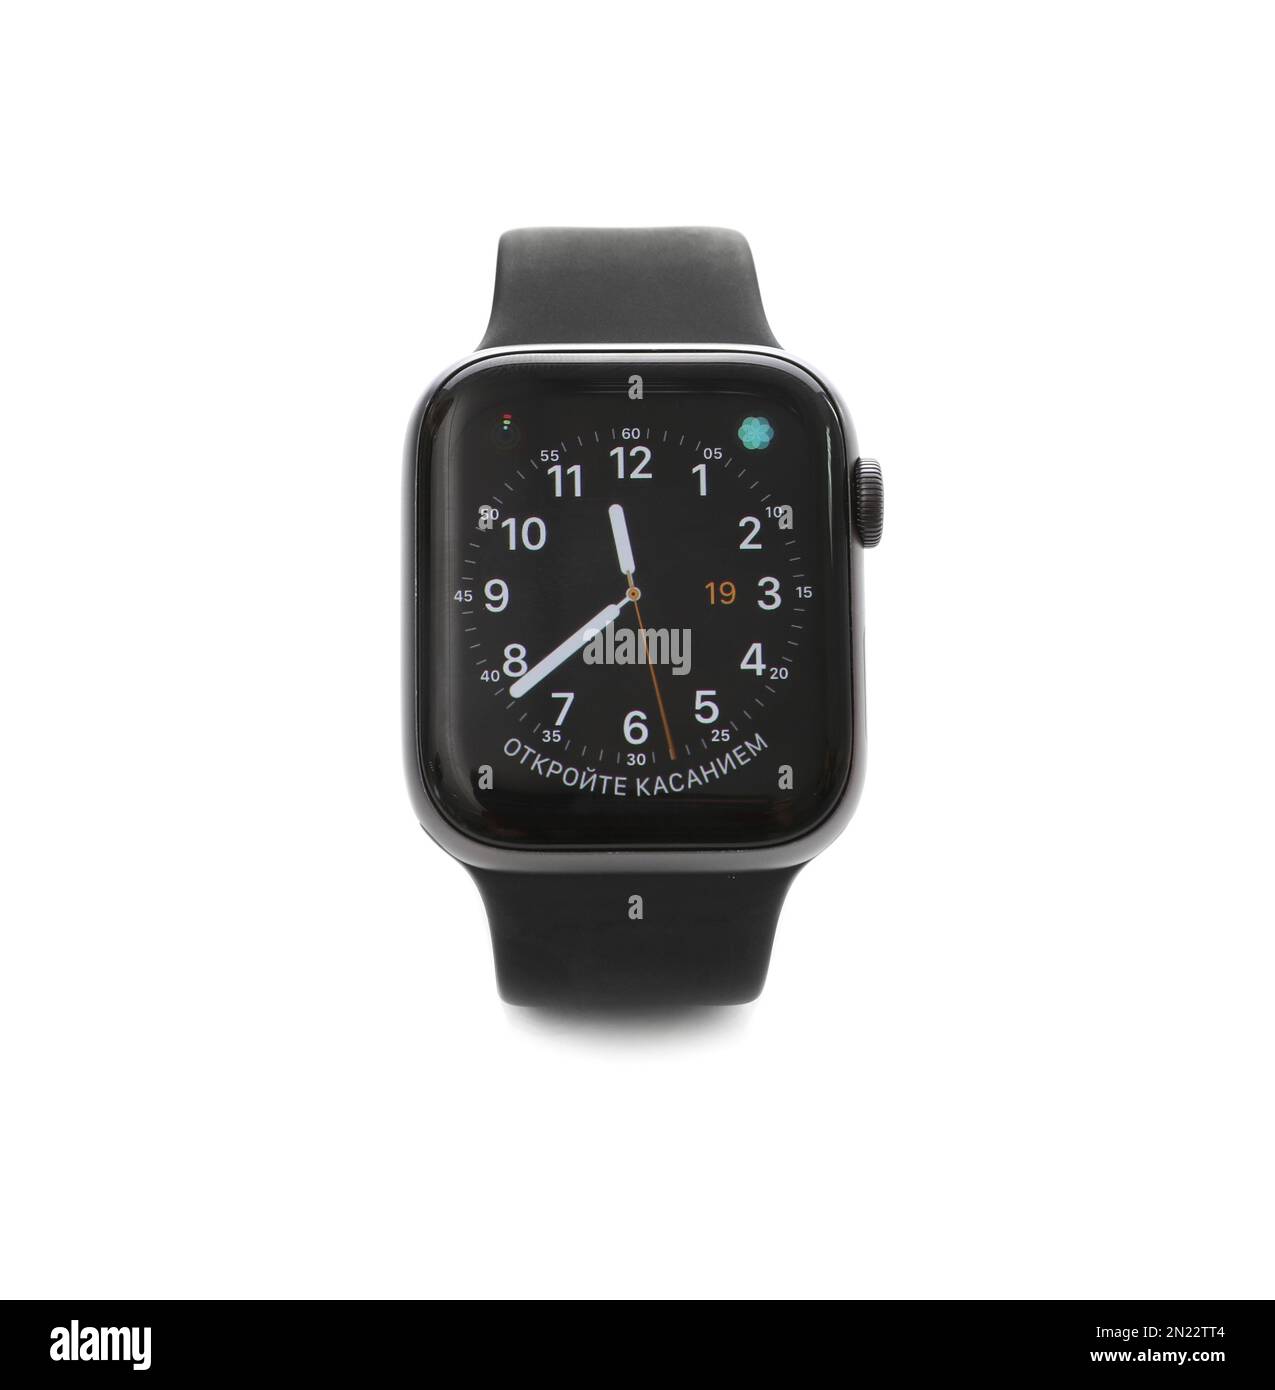 MYKOLAIV, UKRAINE - SEPTEMBER 19, 2019: Apple Watch with analog clock face skin on screen against white background Stock Photo